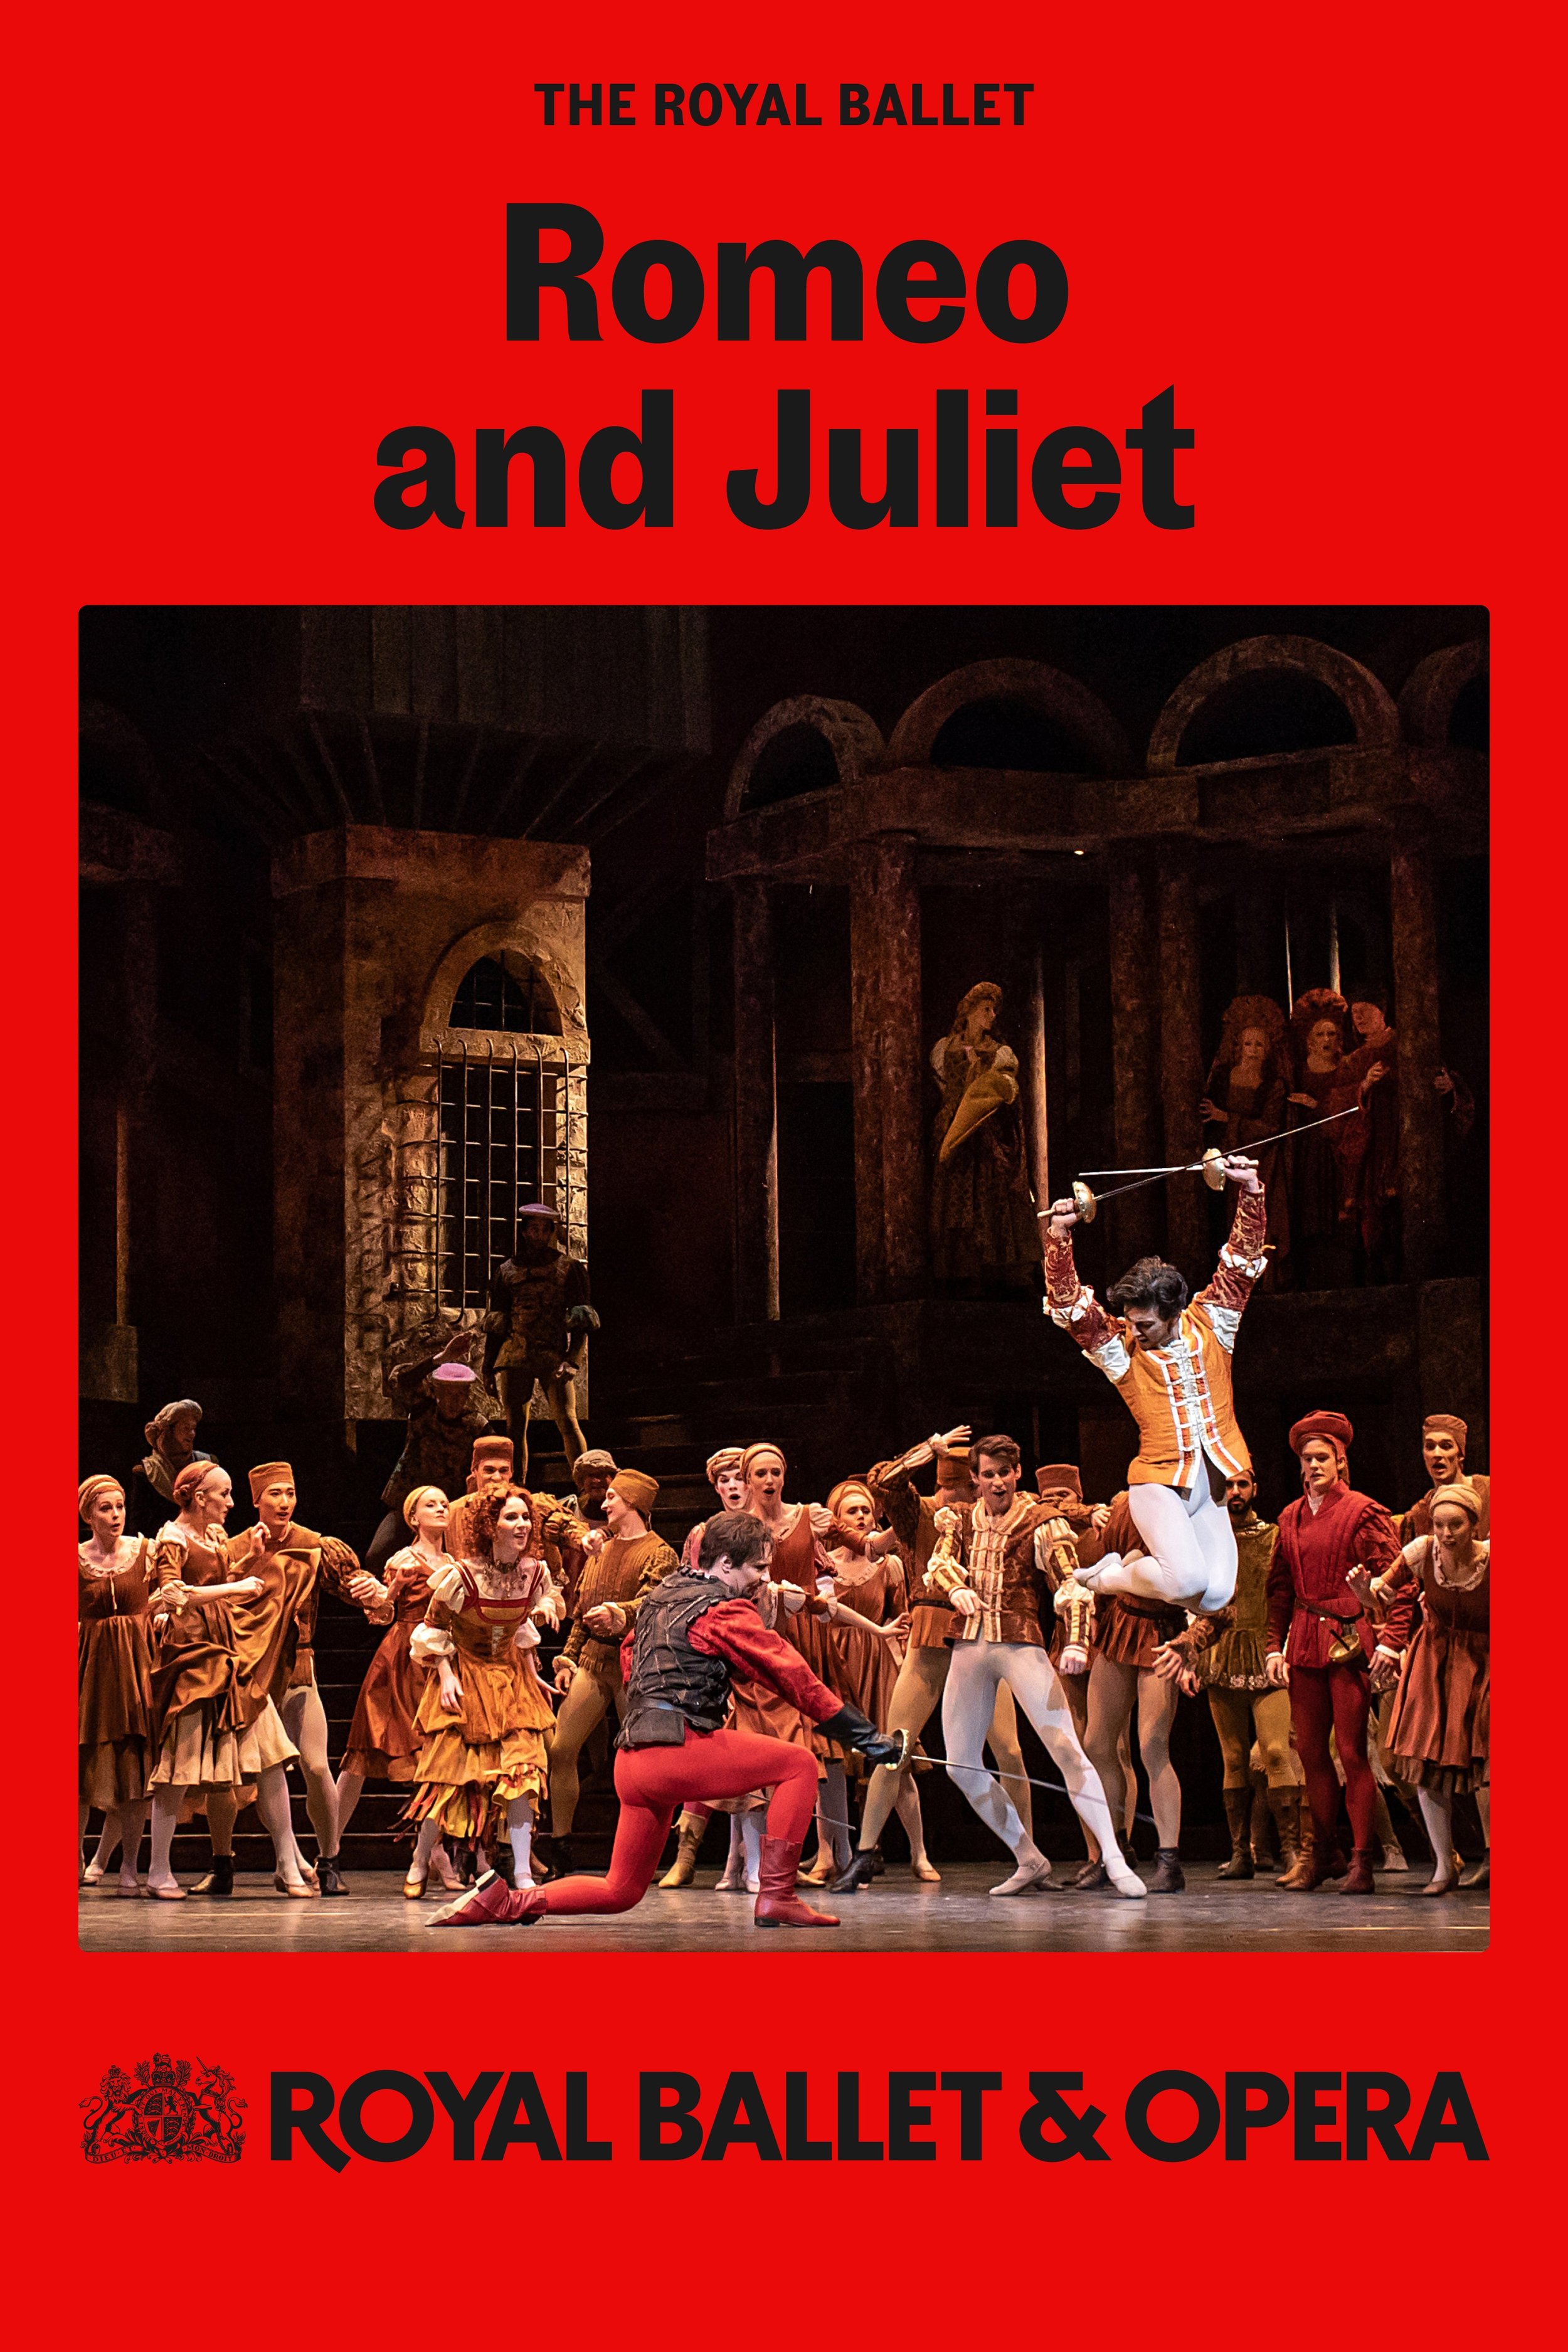 Royal Ballet and Opera: Romeo and Juliet